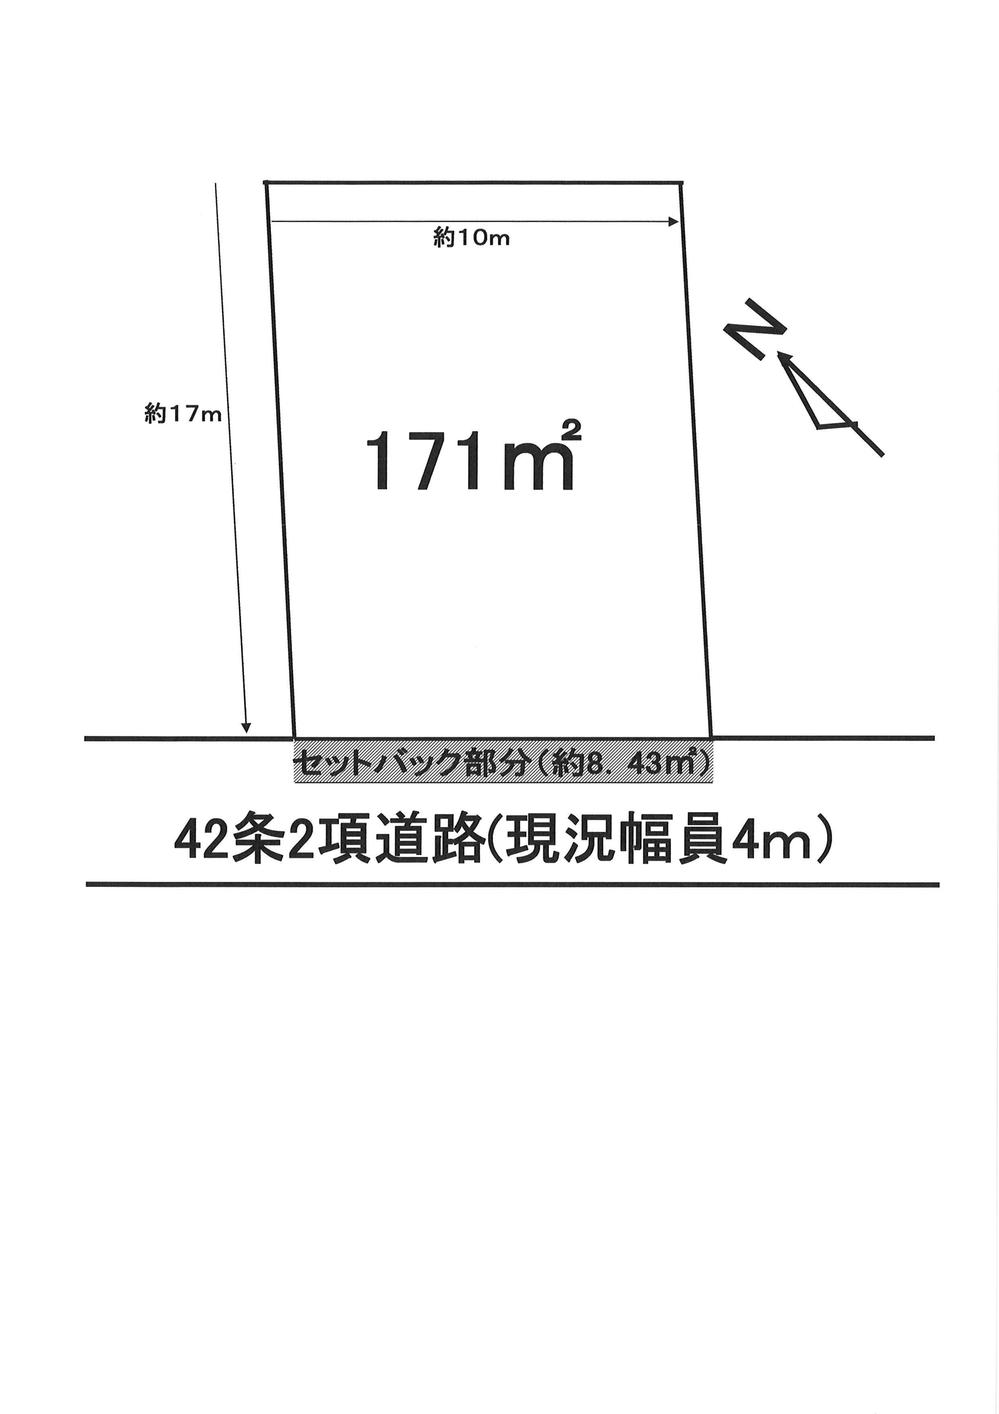 Compartment figure. Land price 5.3 million yen, Land area 179.43 sq m